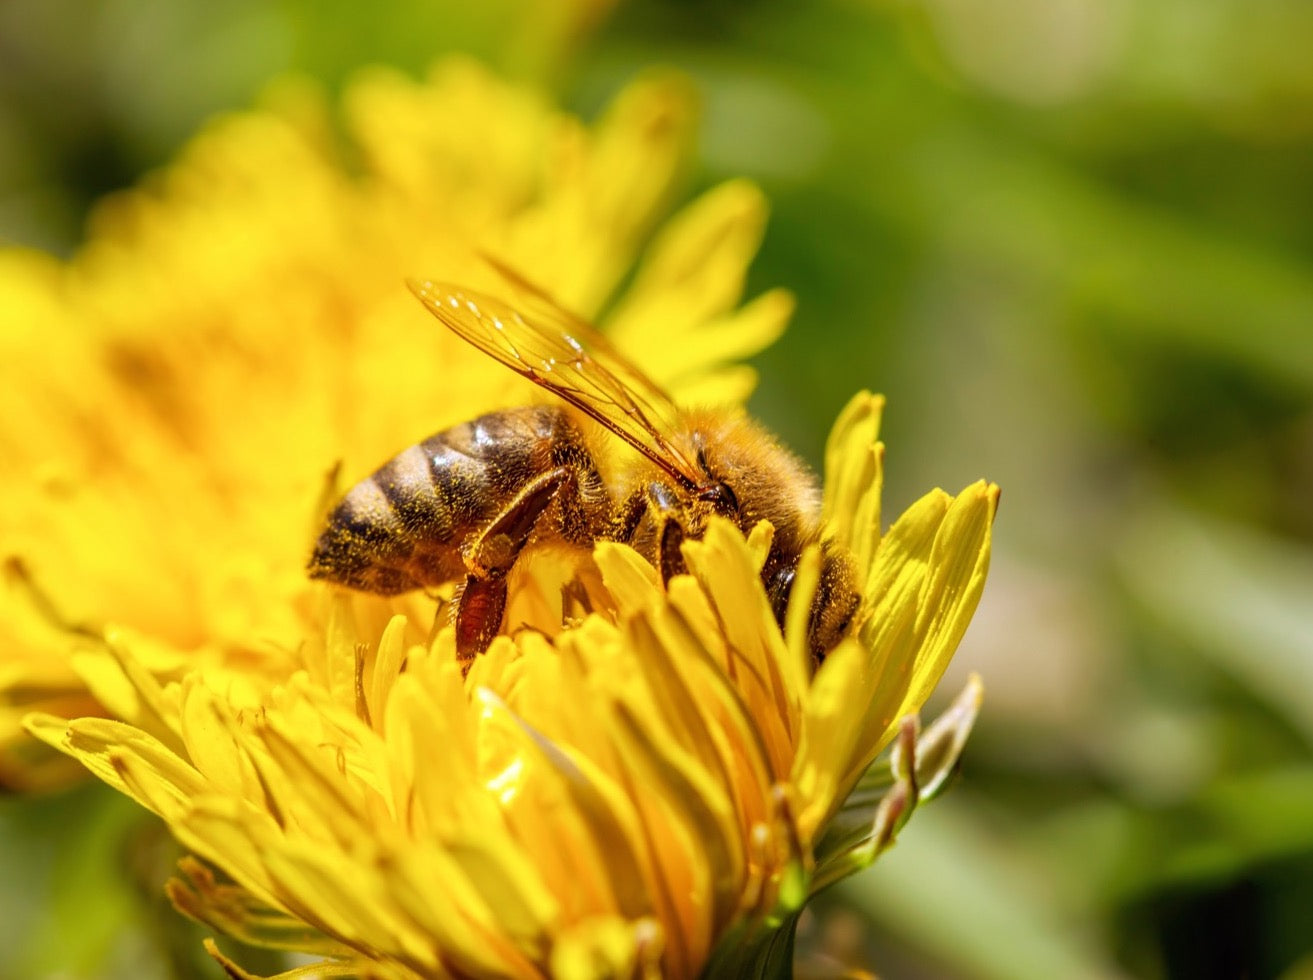 Close up shot of honeybee working on dandelion flower, covered in pollen.